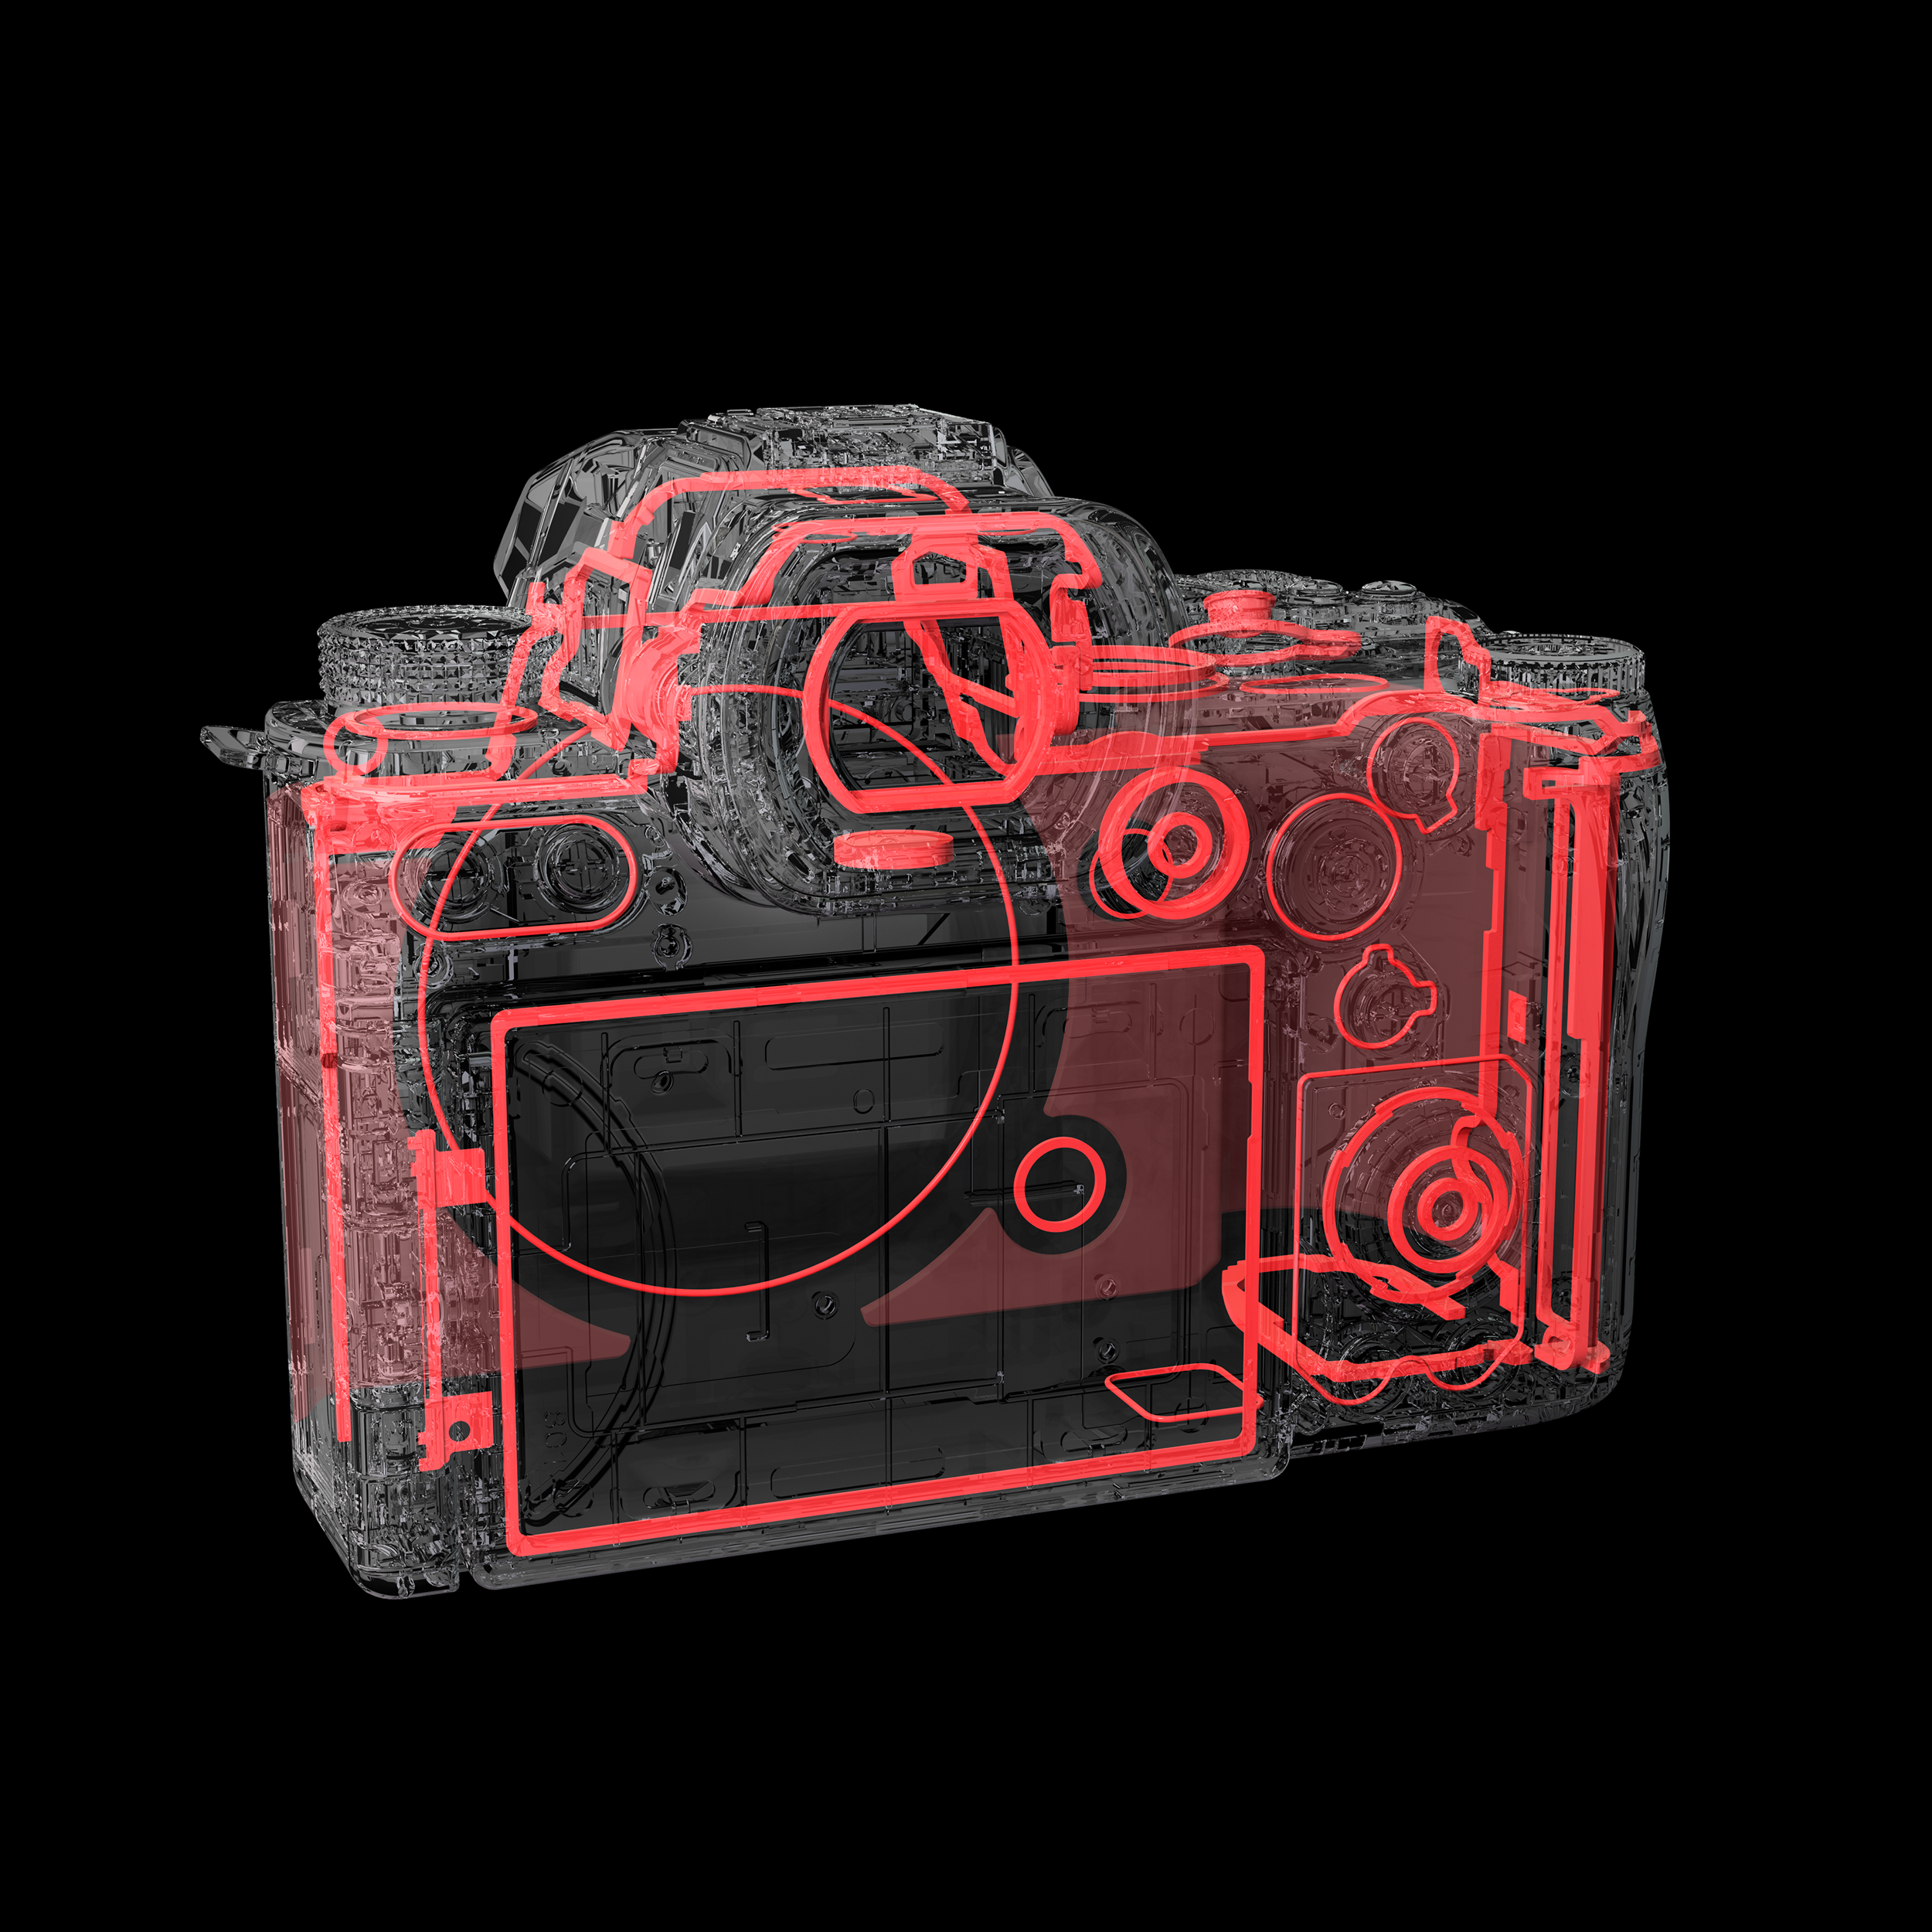 Panasonic LUMIX S5M2 Full Frame Digital Camera - with 20-60mm lens